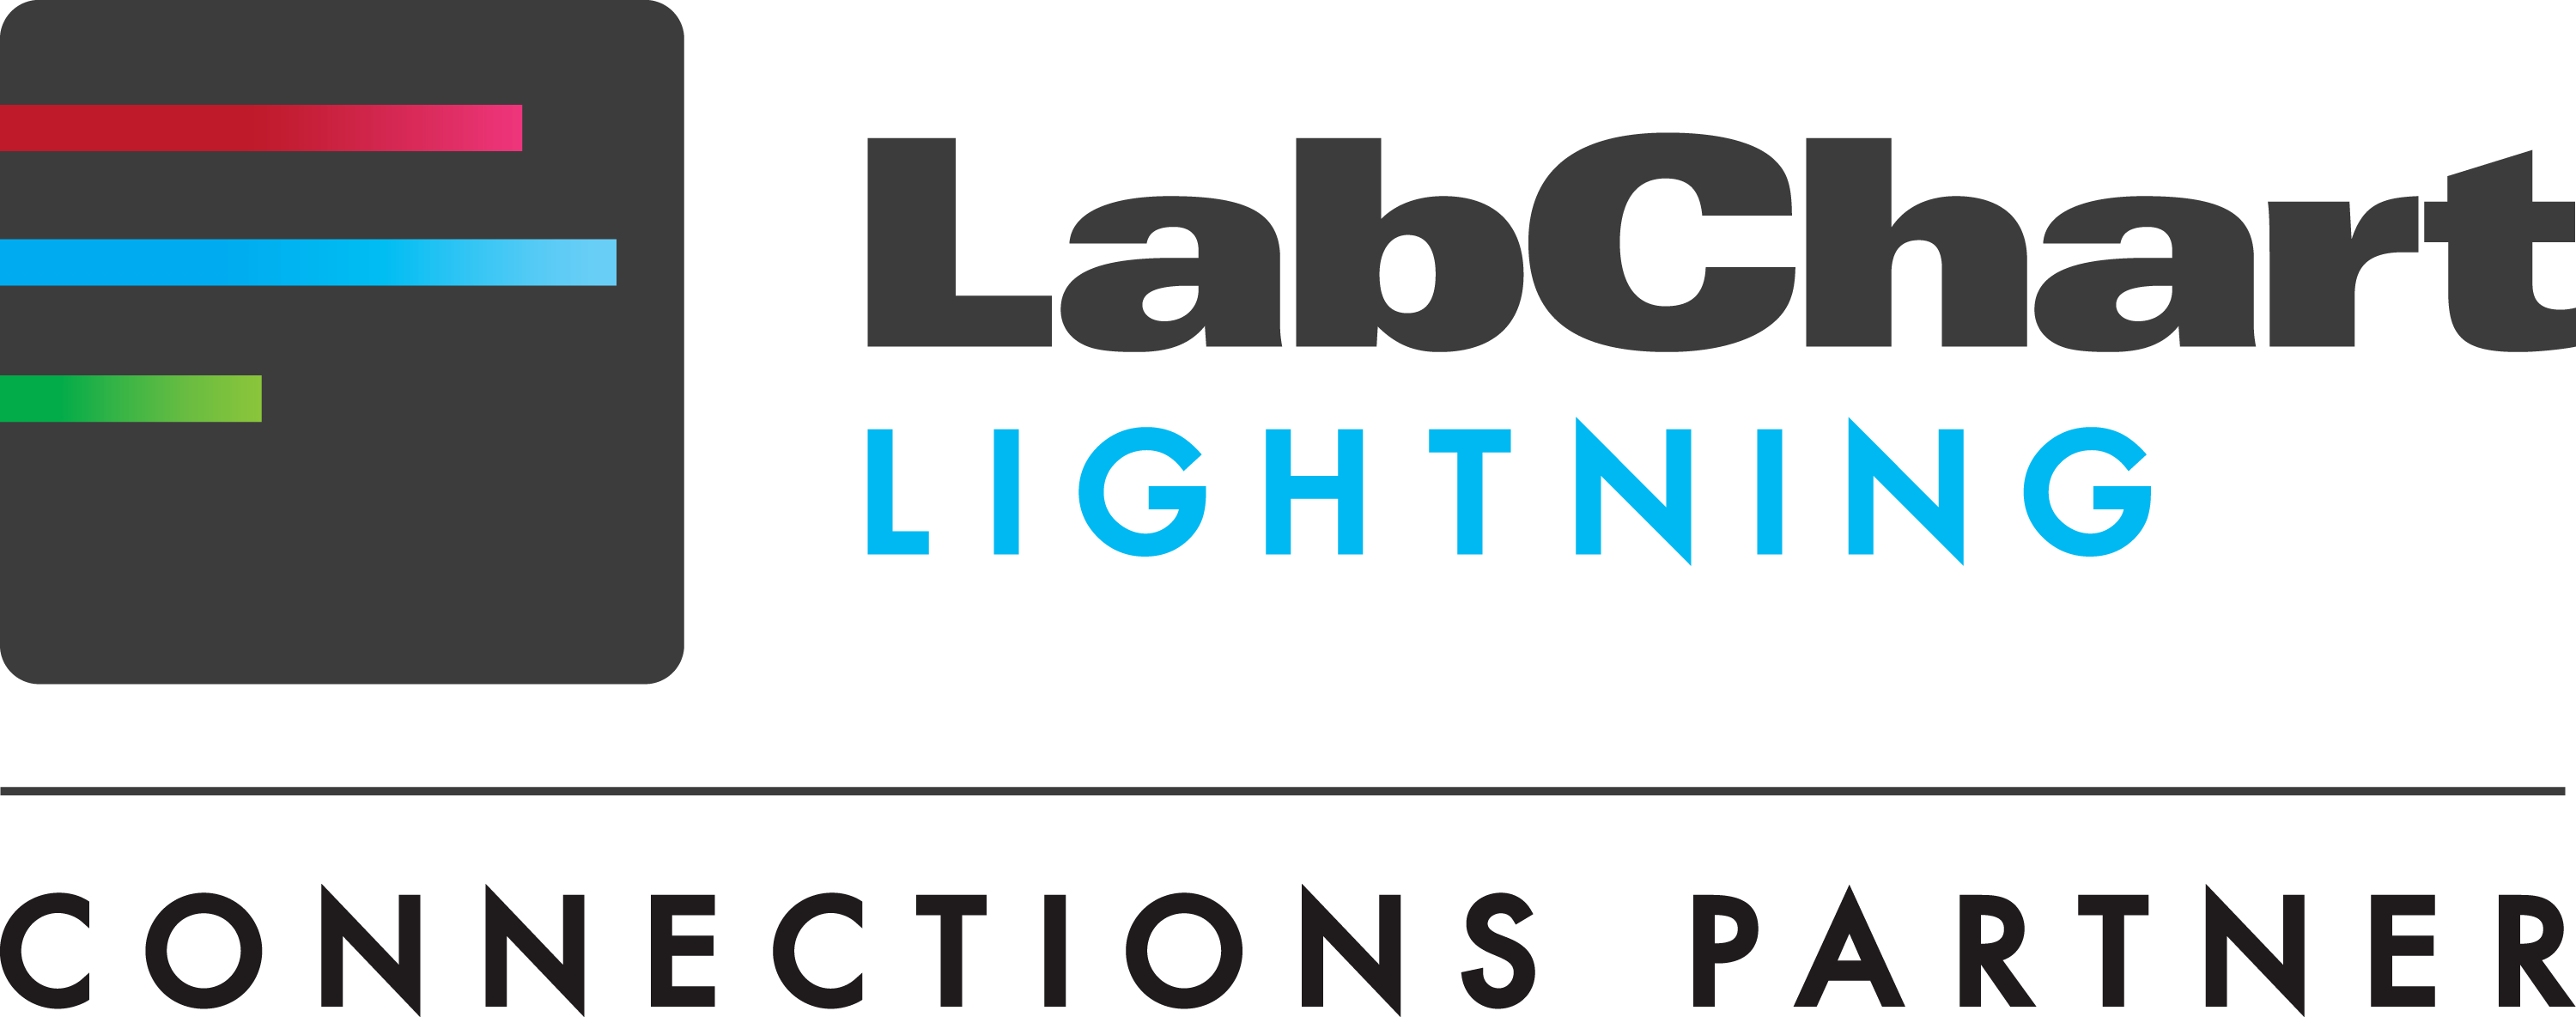 LabChart Lightning Connections Parter